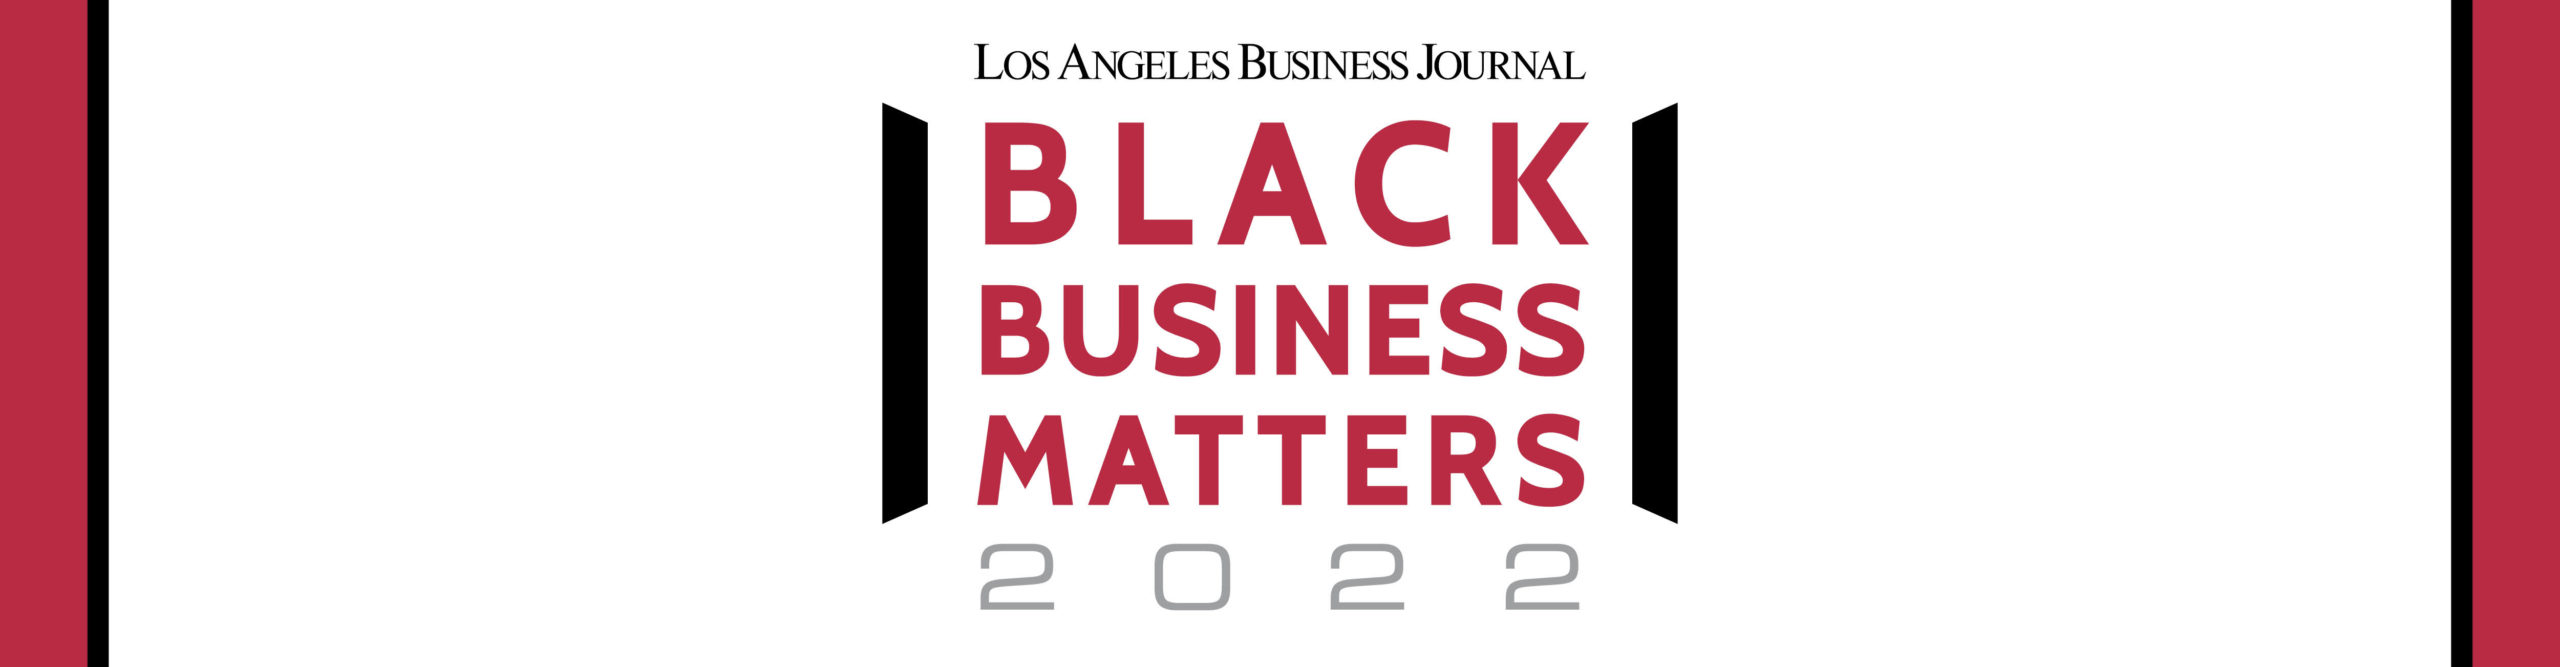 Black Business Matters Event Banner